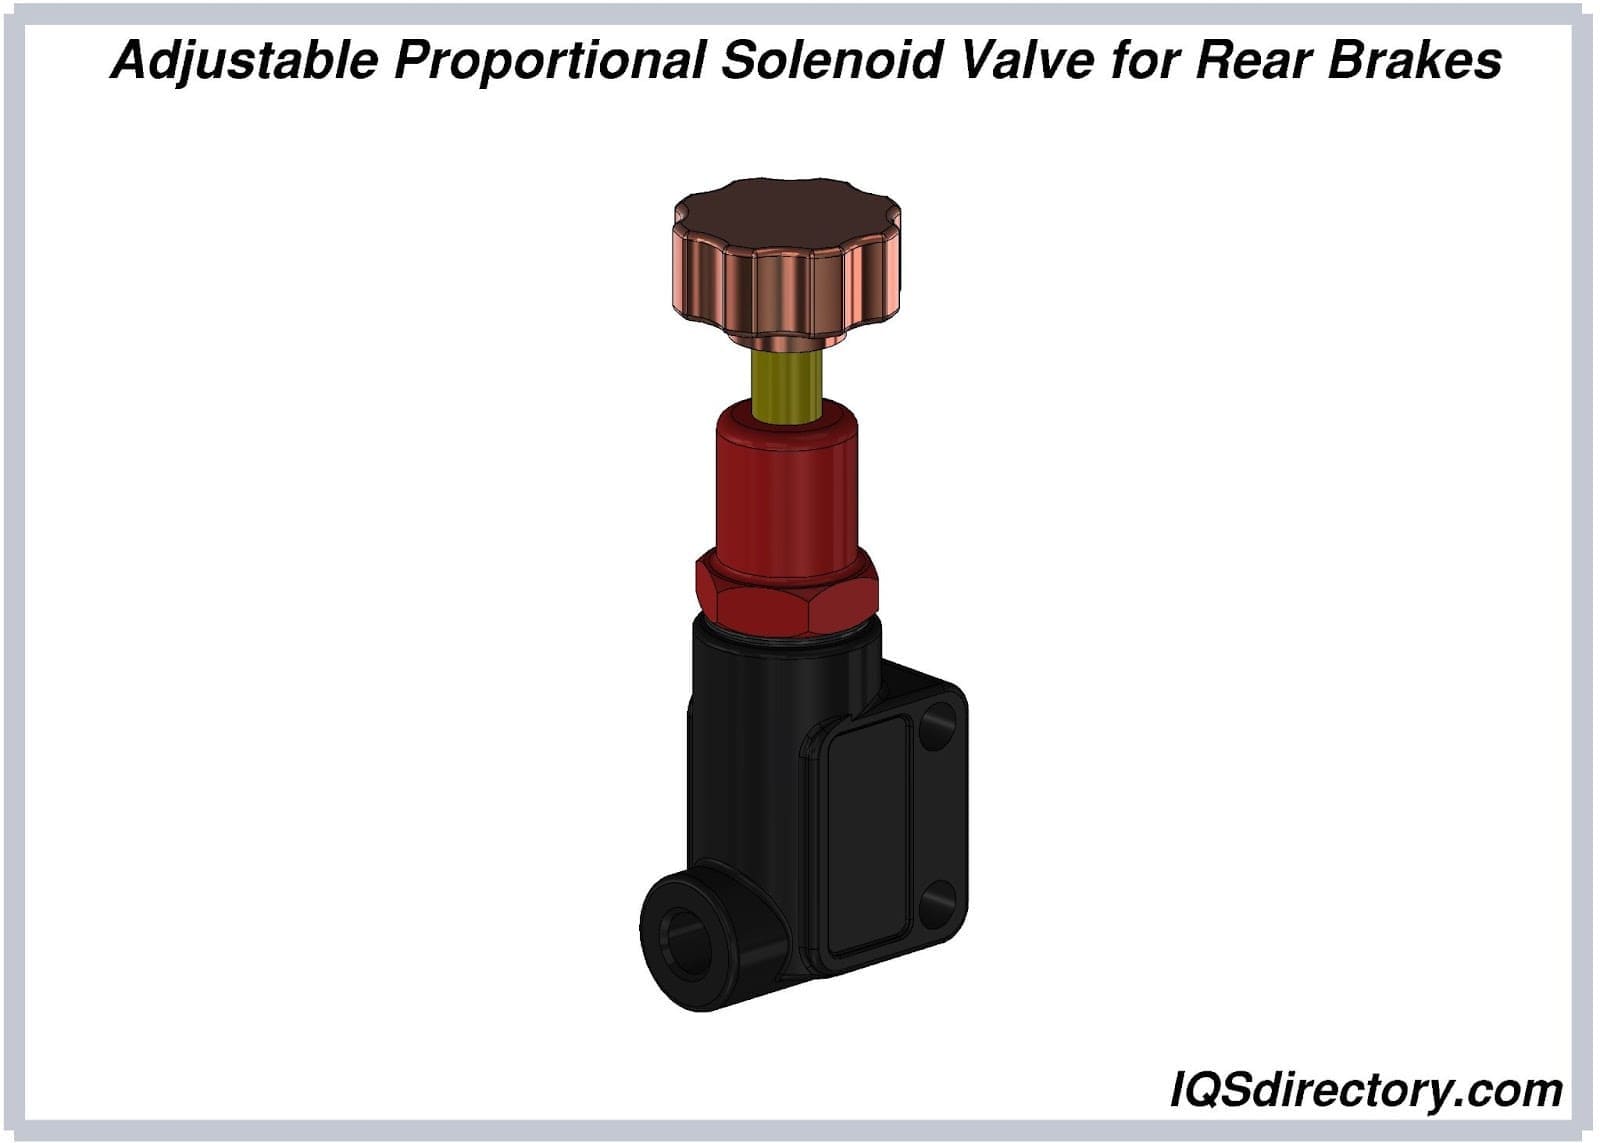 Adjustable Proportional Solenoid Valve for Rear Brakes